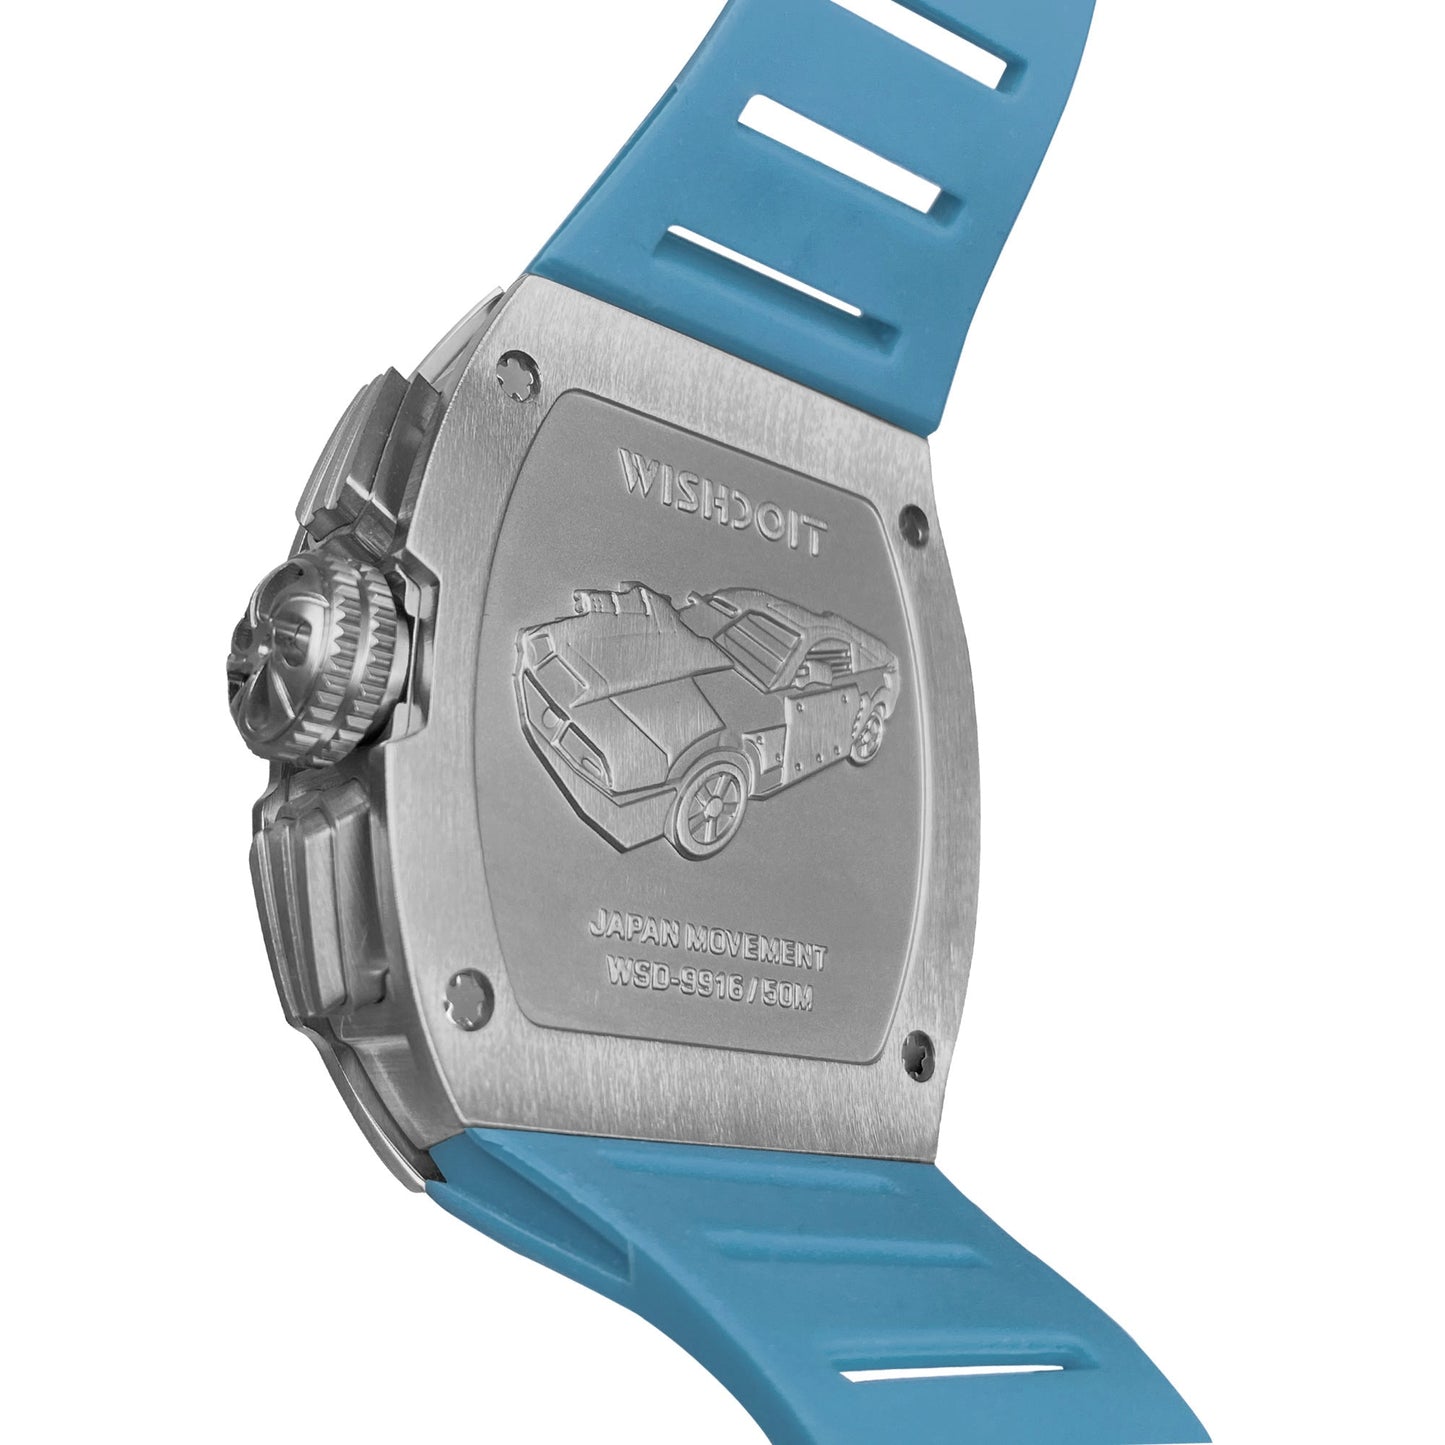 Shop Racing GT Chronograph Quartz Silver Light Blue Watch on  Wishdoit Watches